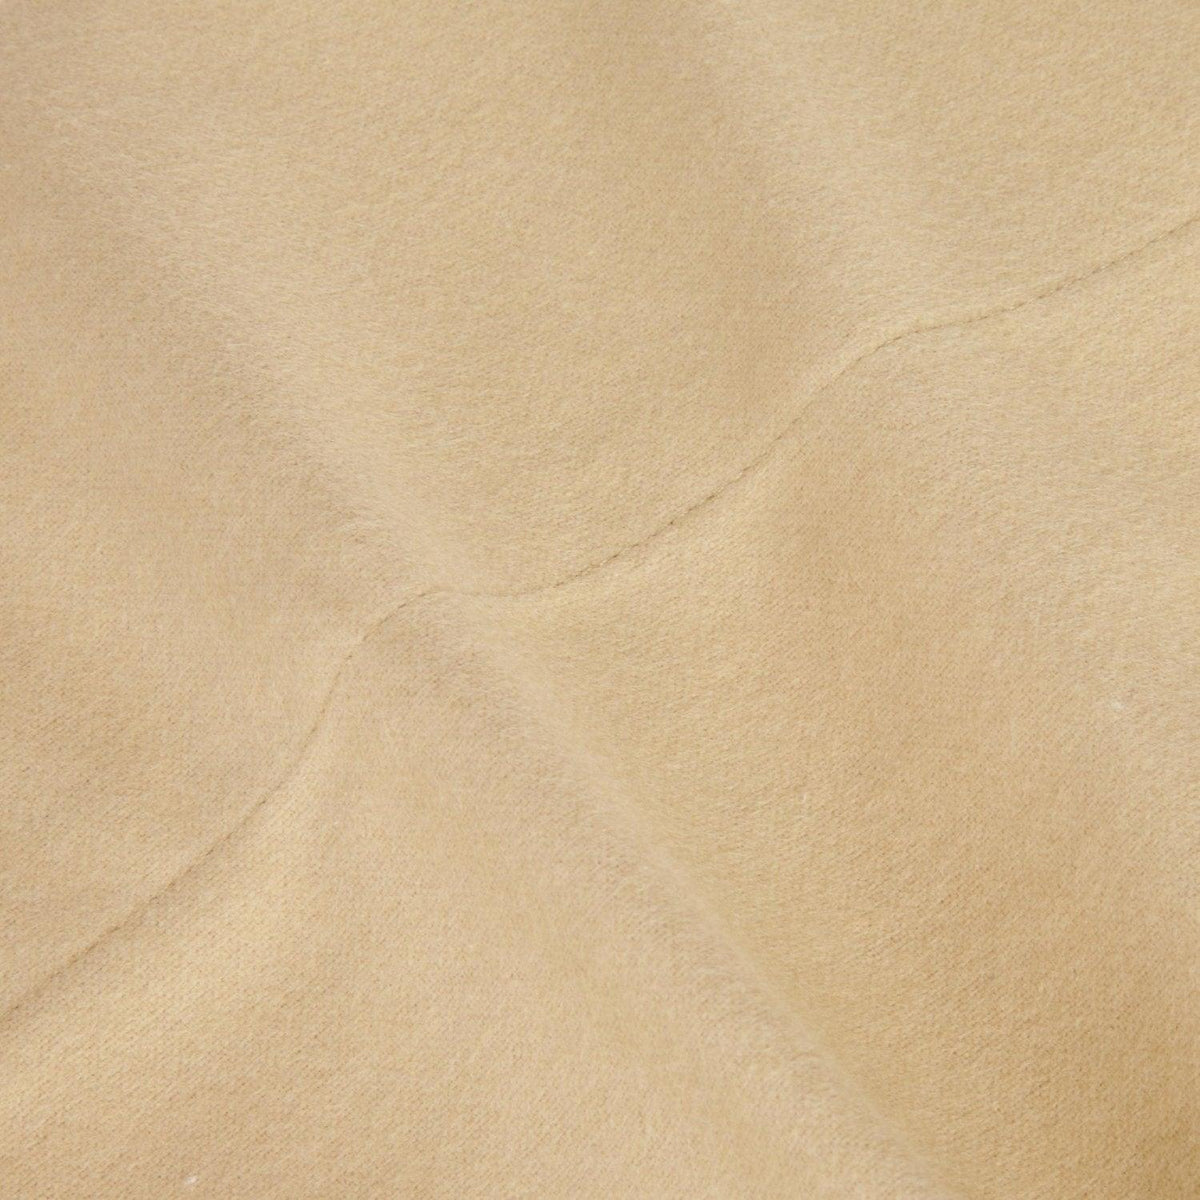 Queen size 100-Percent Cotton Velvet Sheet Set in Chamois Color - beddingbag.com